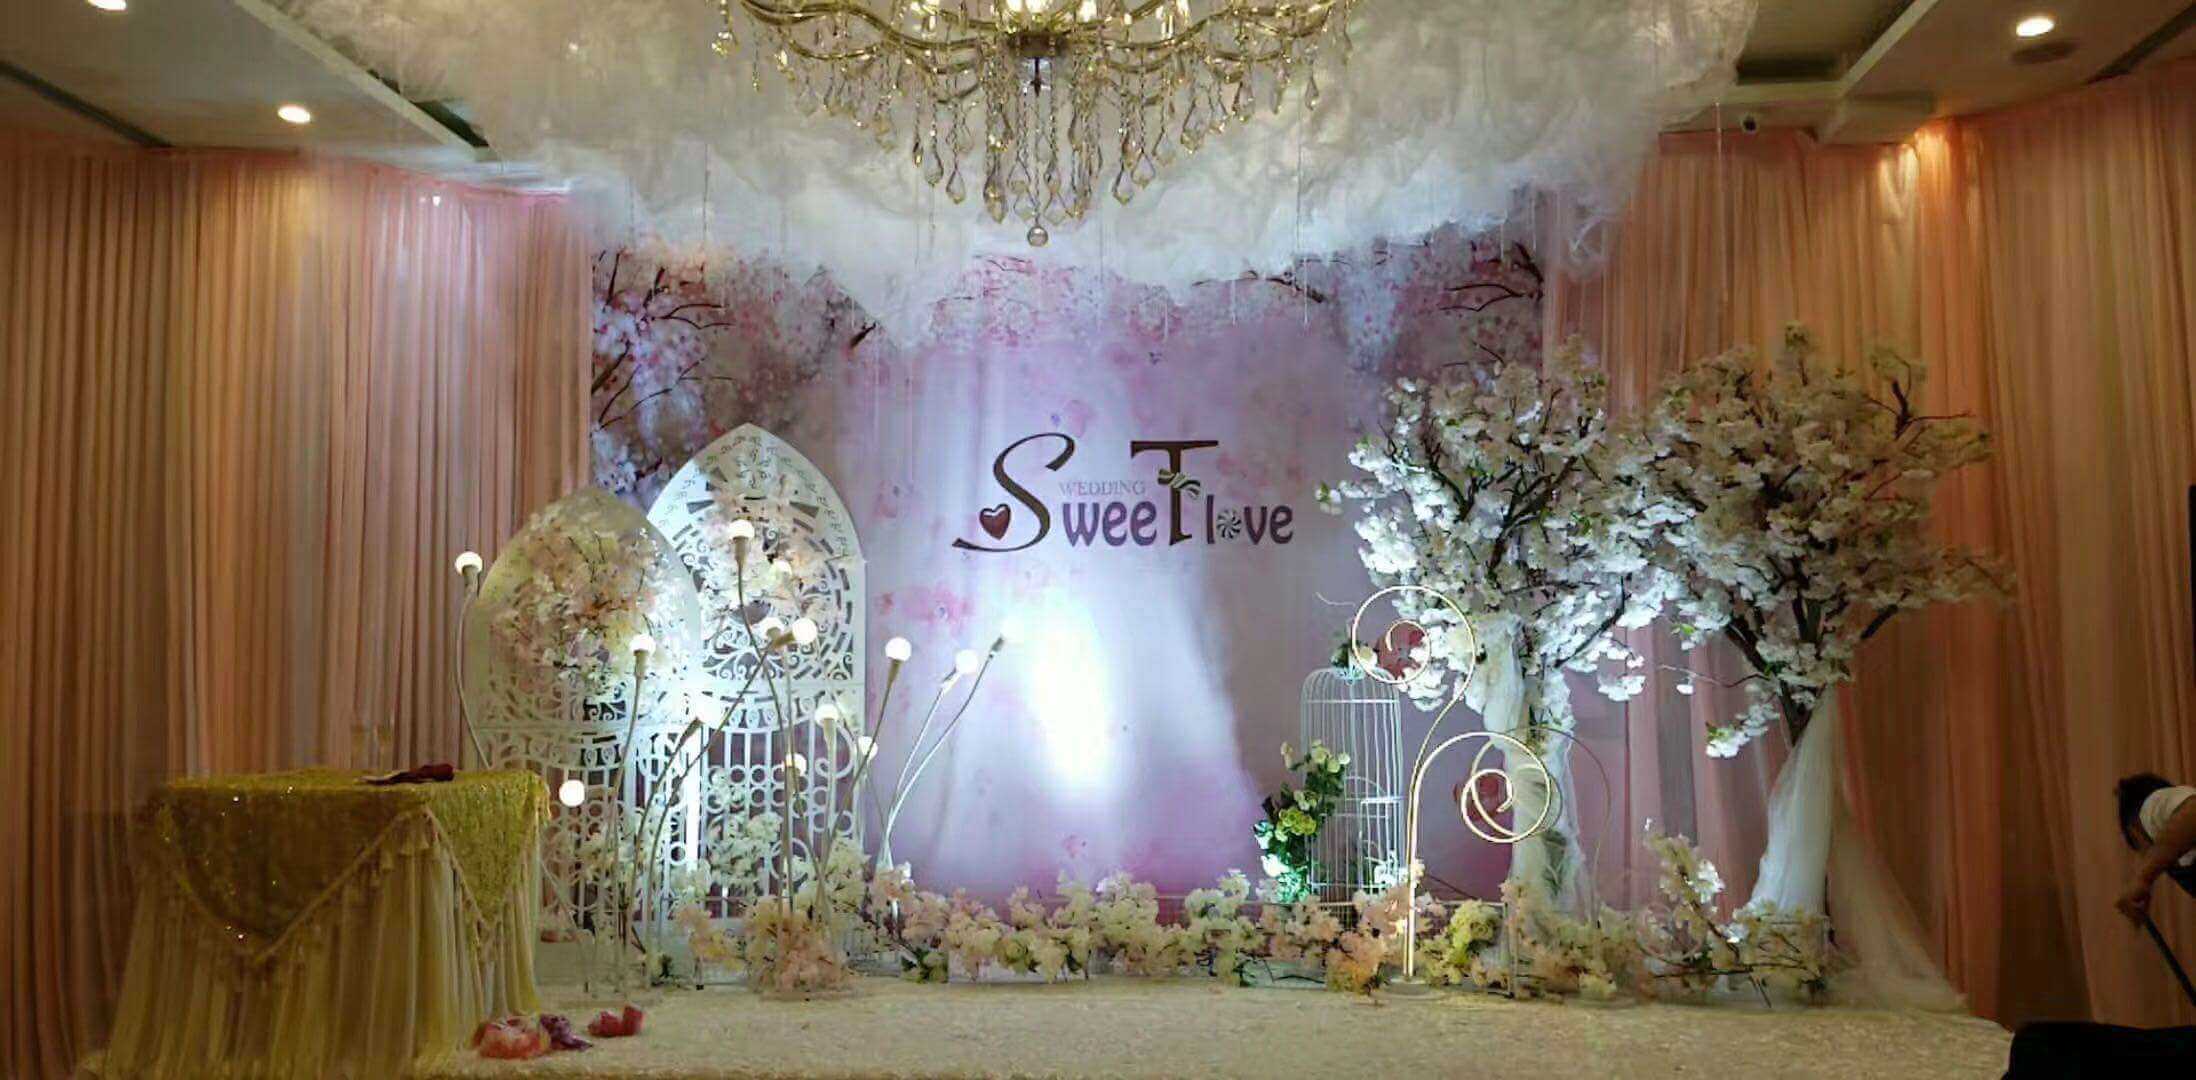 Wedding stage set